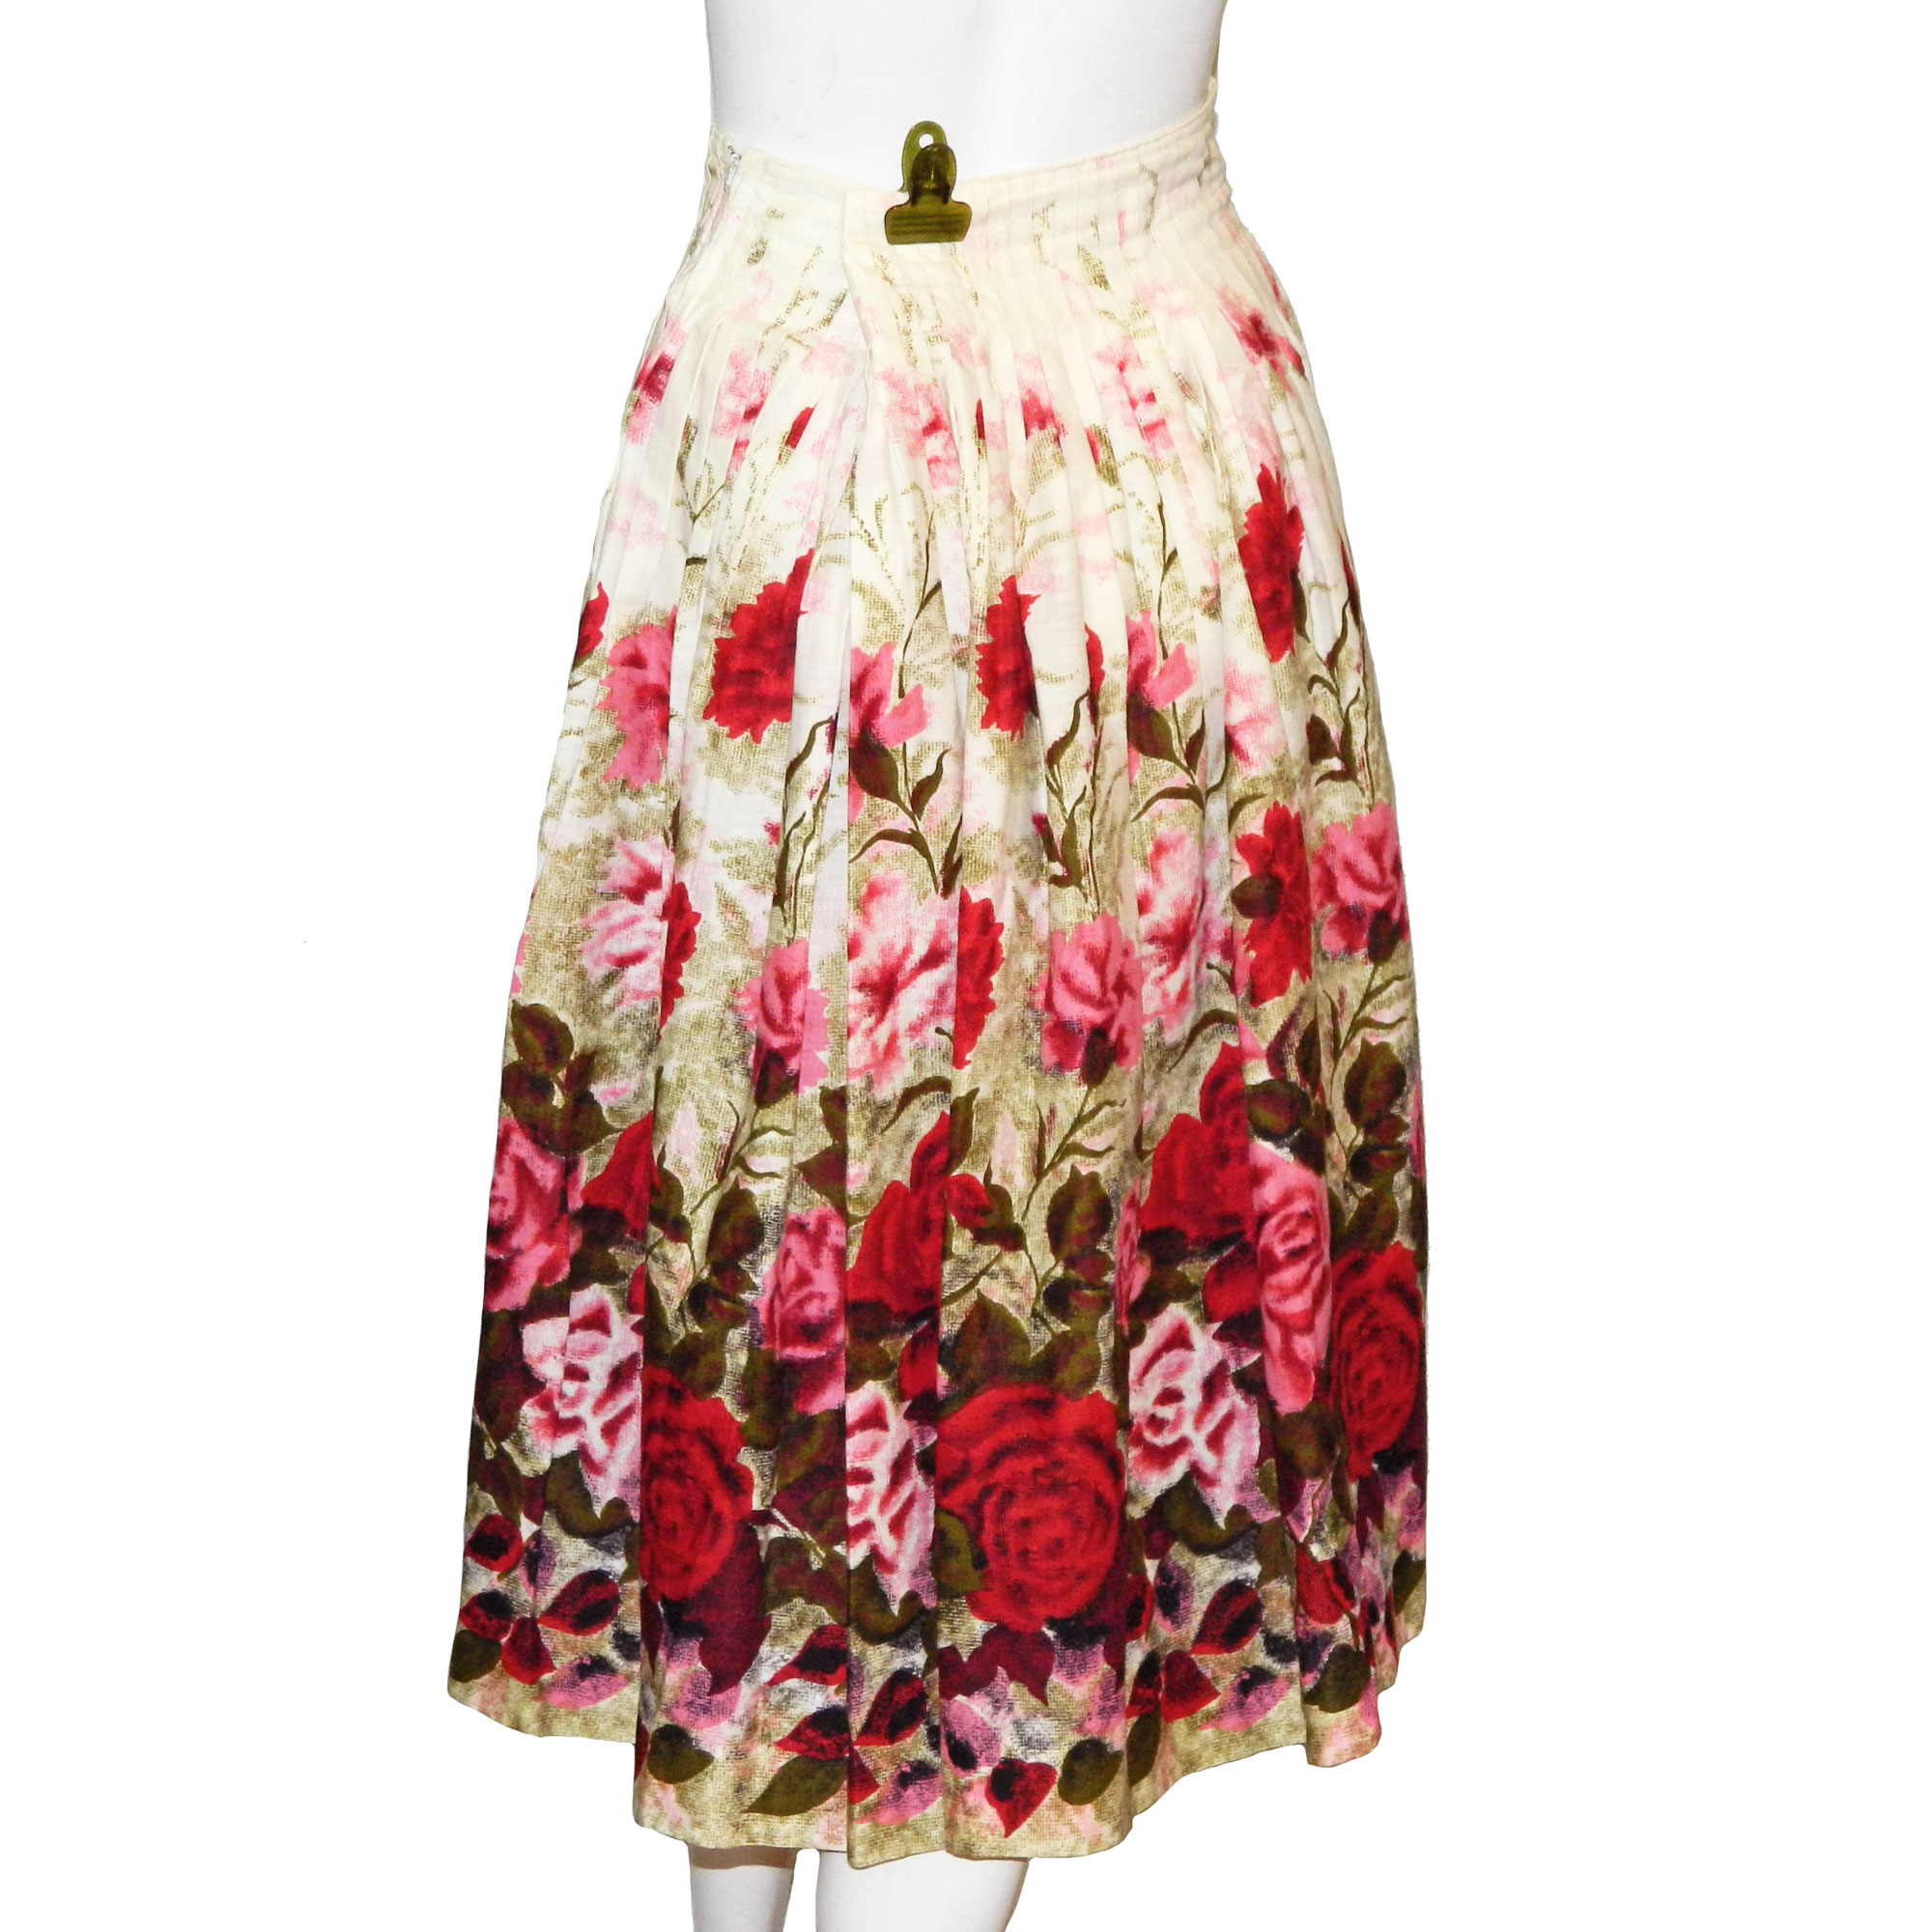 1950s cotton floral skirt